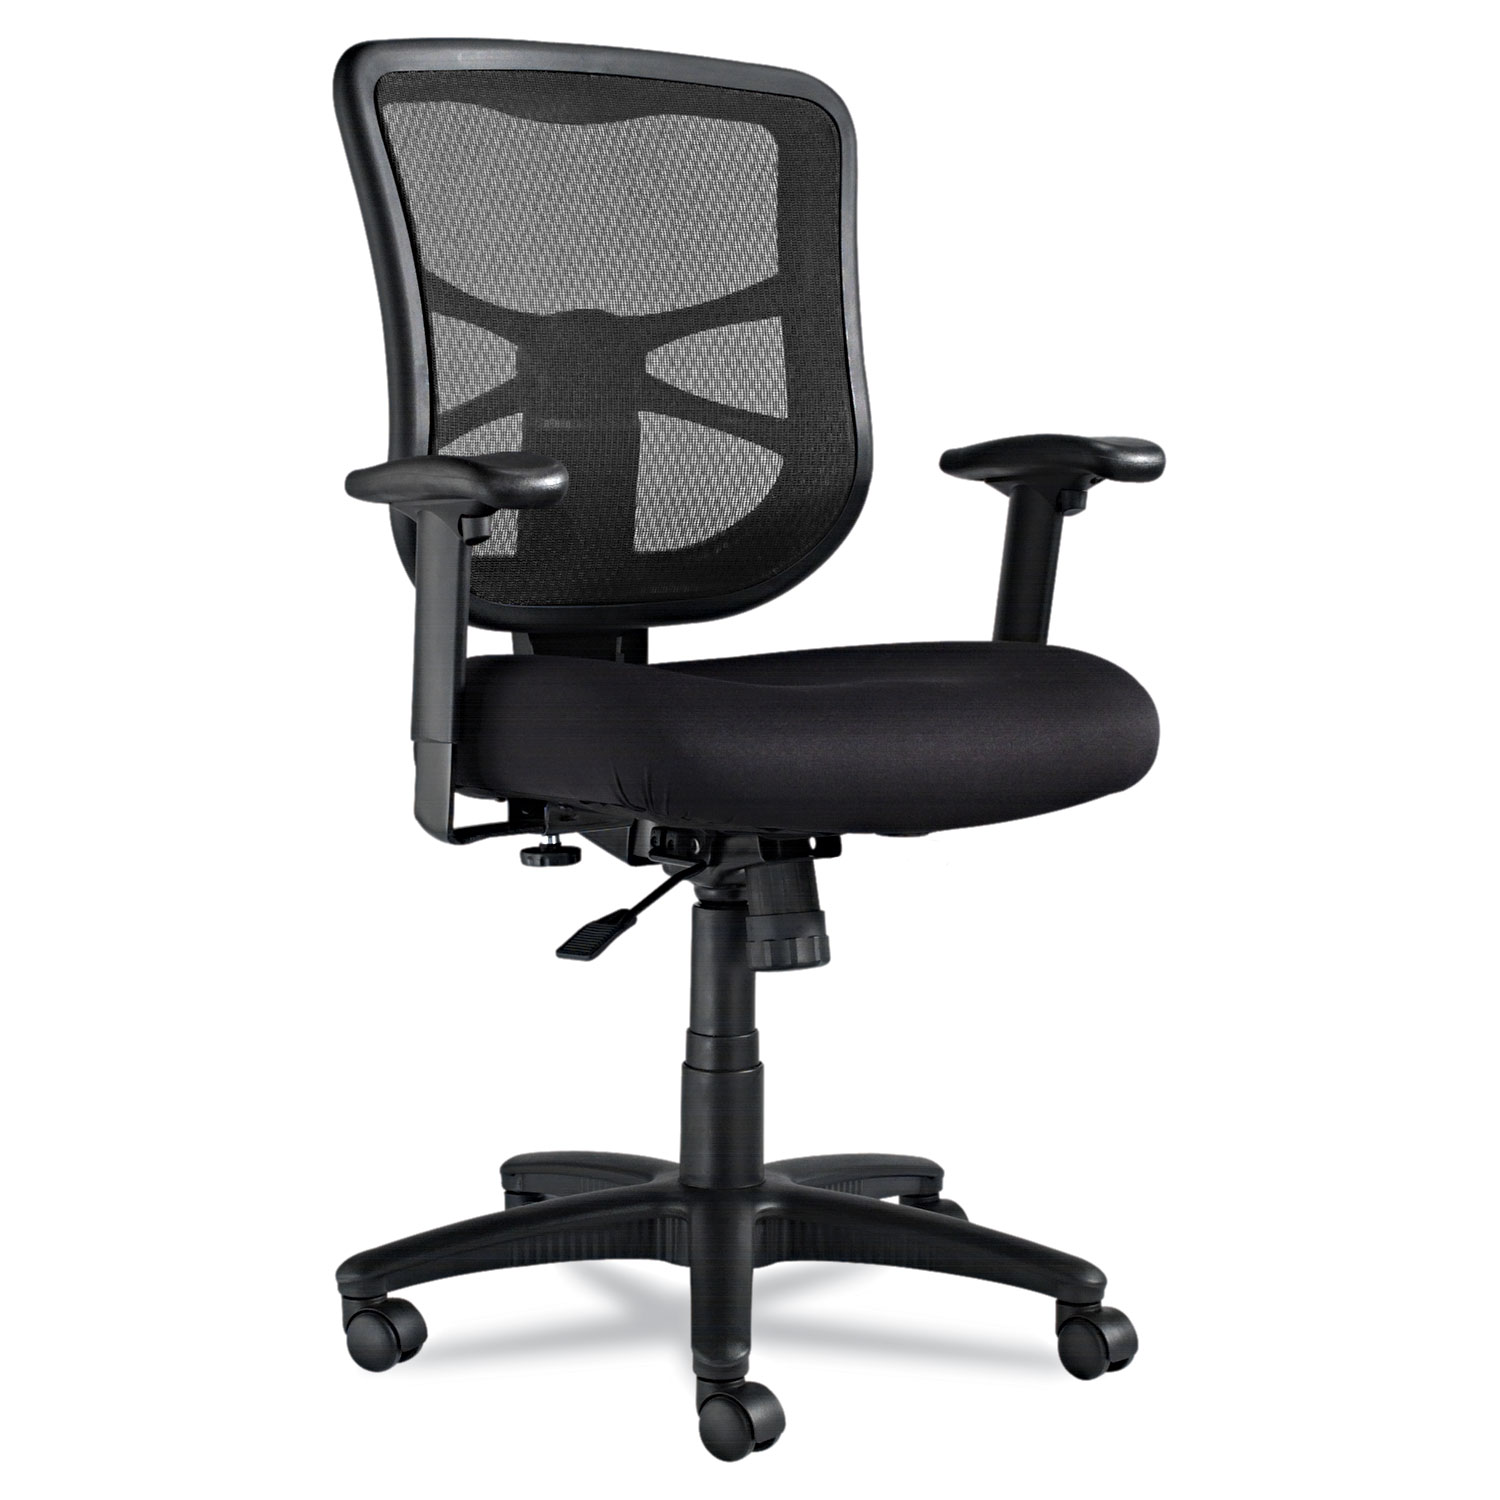  Alera ALEEL42BME10B Alera Elusion Series Mesh Mid-Back Swivel/Tilt Chair, Supports up to 275 lbs., Black Seat/Black Back, Black Base (ALEEL42BME10B) 